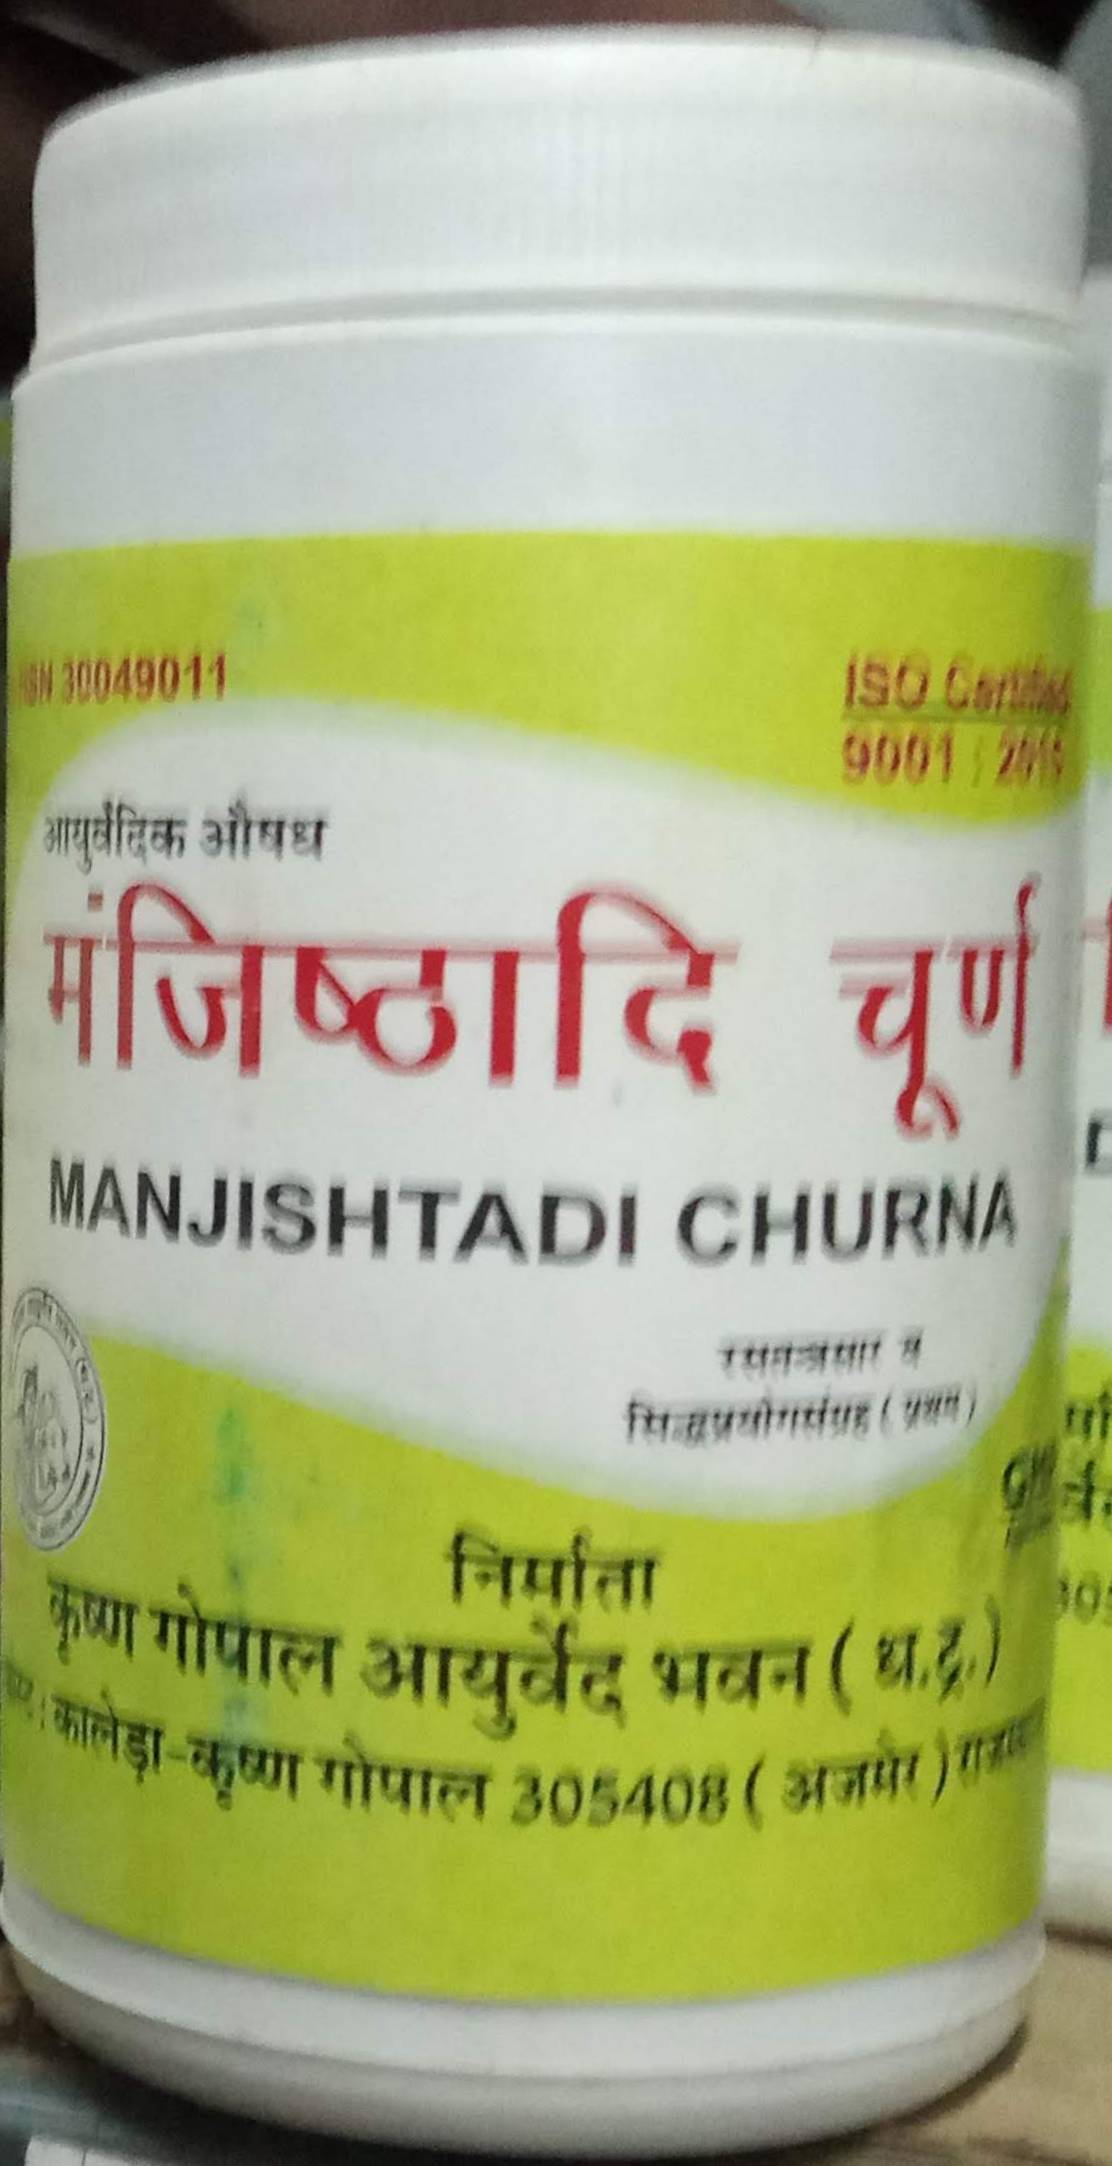 manjishthadi churna 100 gm upto 20% off krishna gopal ayurved bhavan